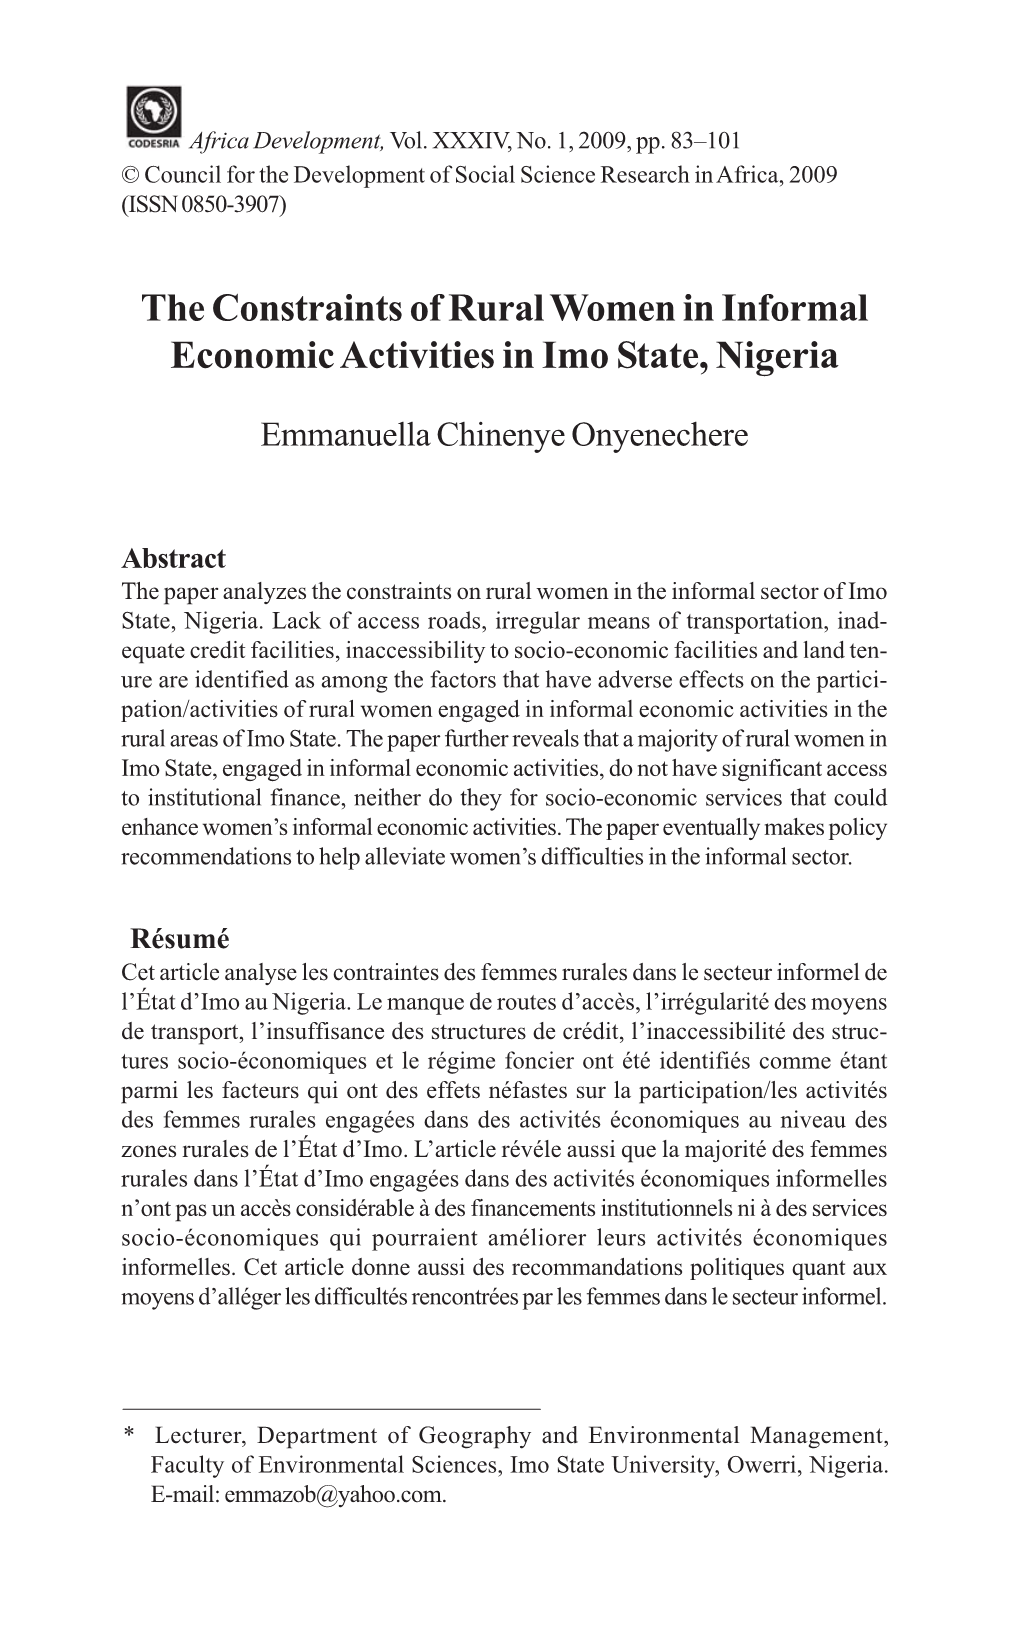 The Constraints of Rural Women in Informal Economic Activities in Imo State, Nigeria